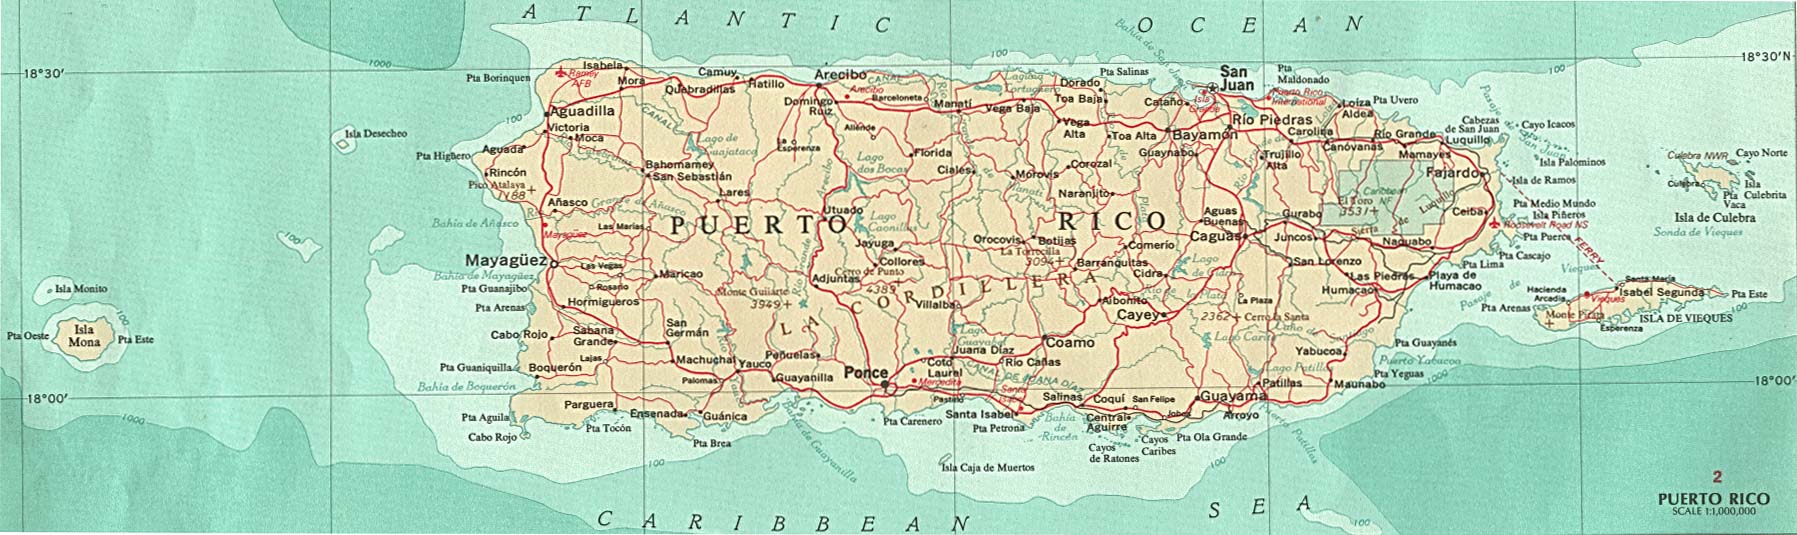 Puerto Rico Map 1970